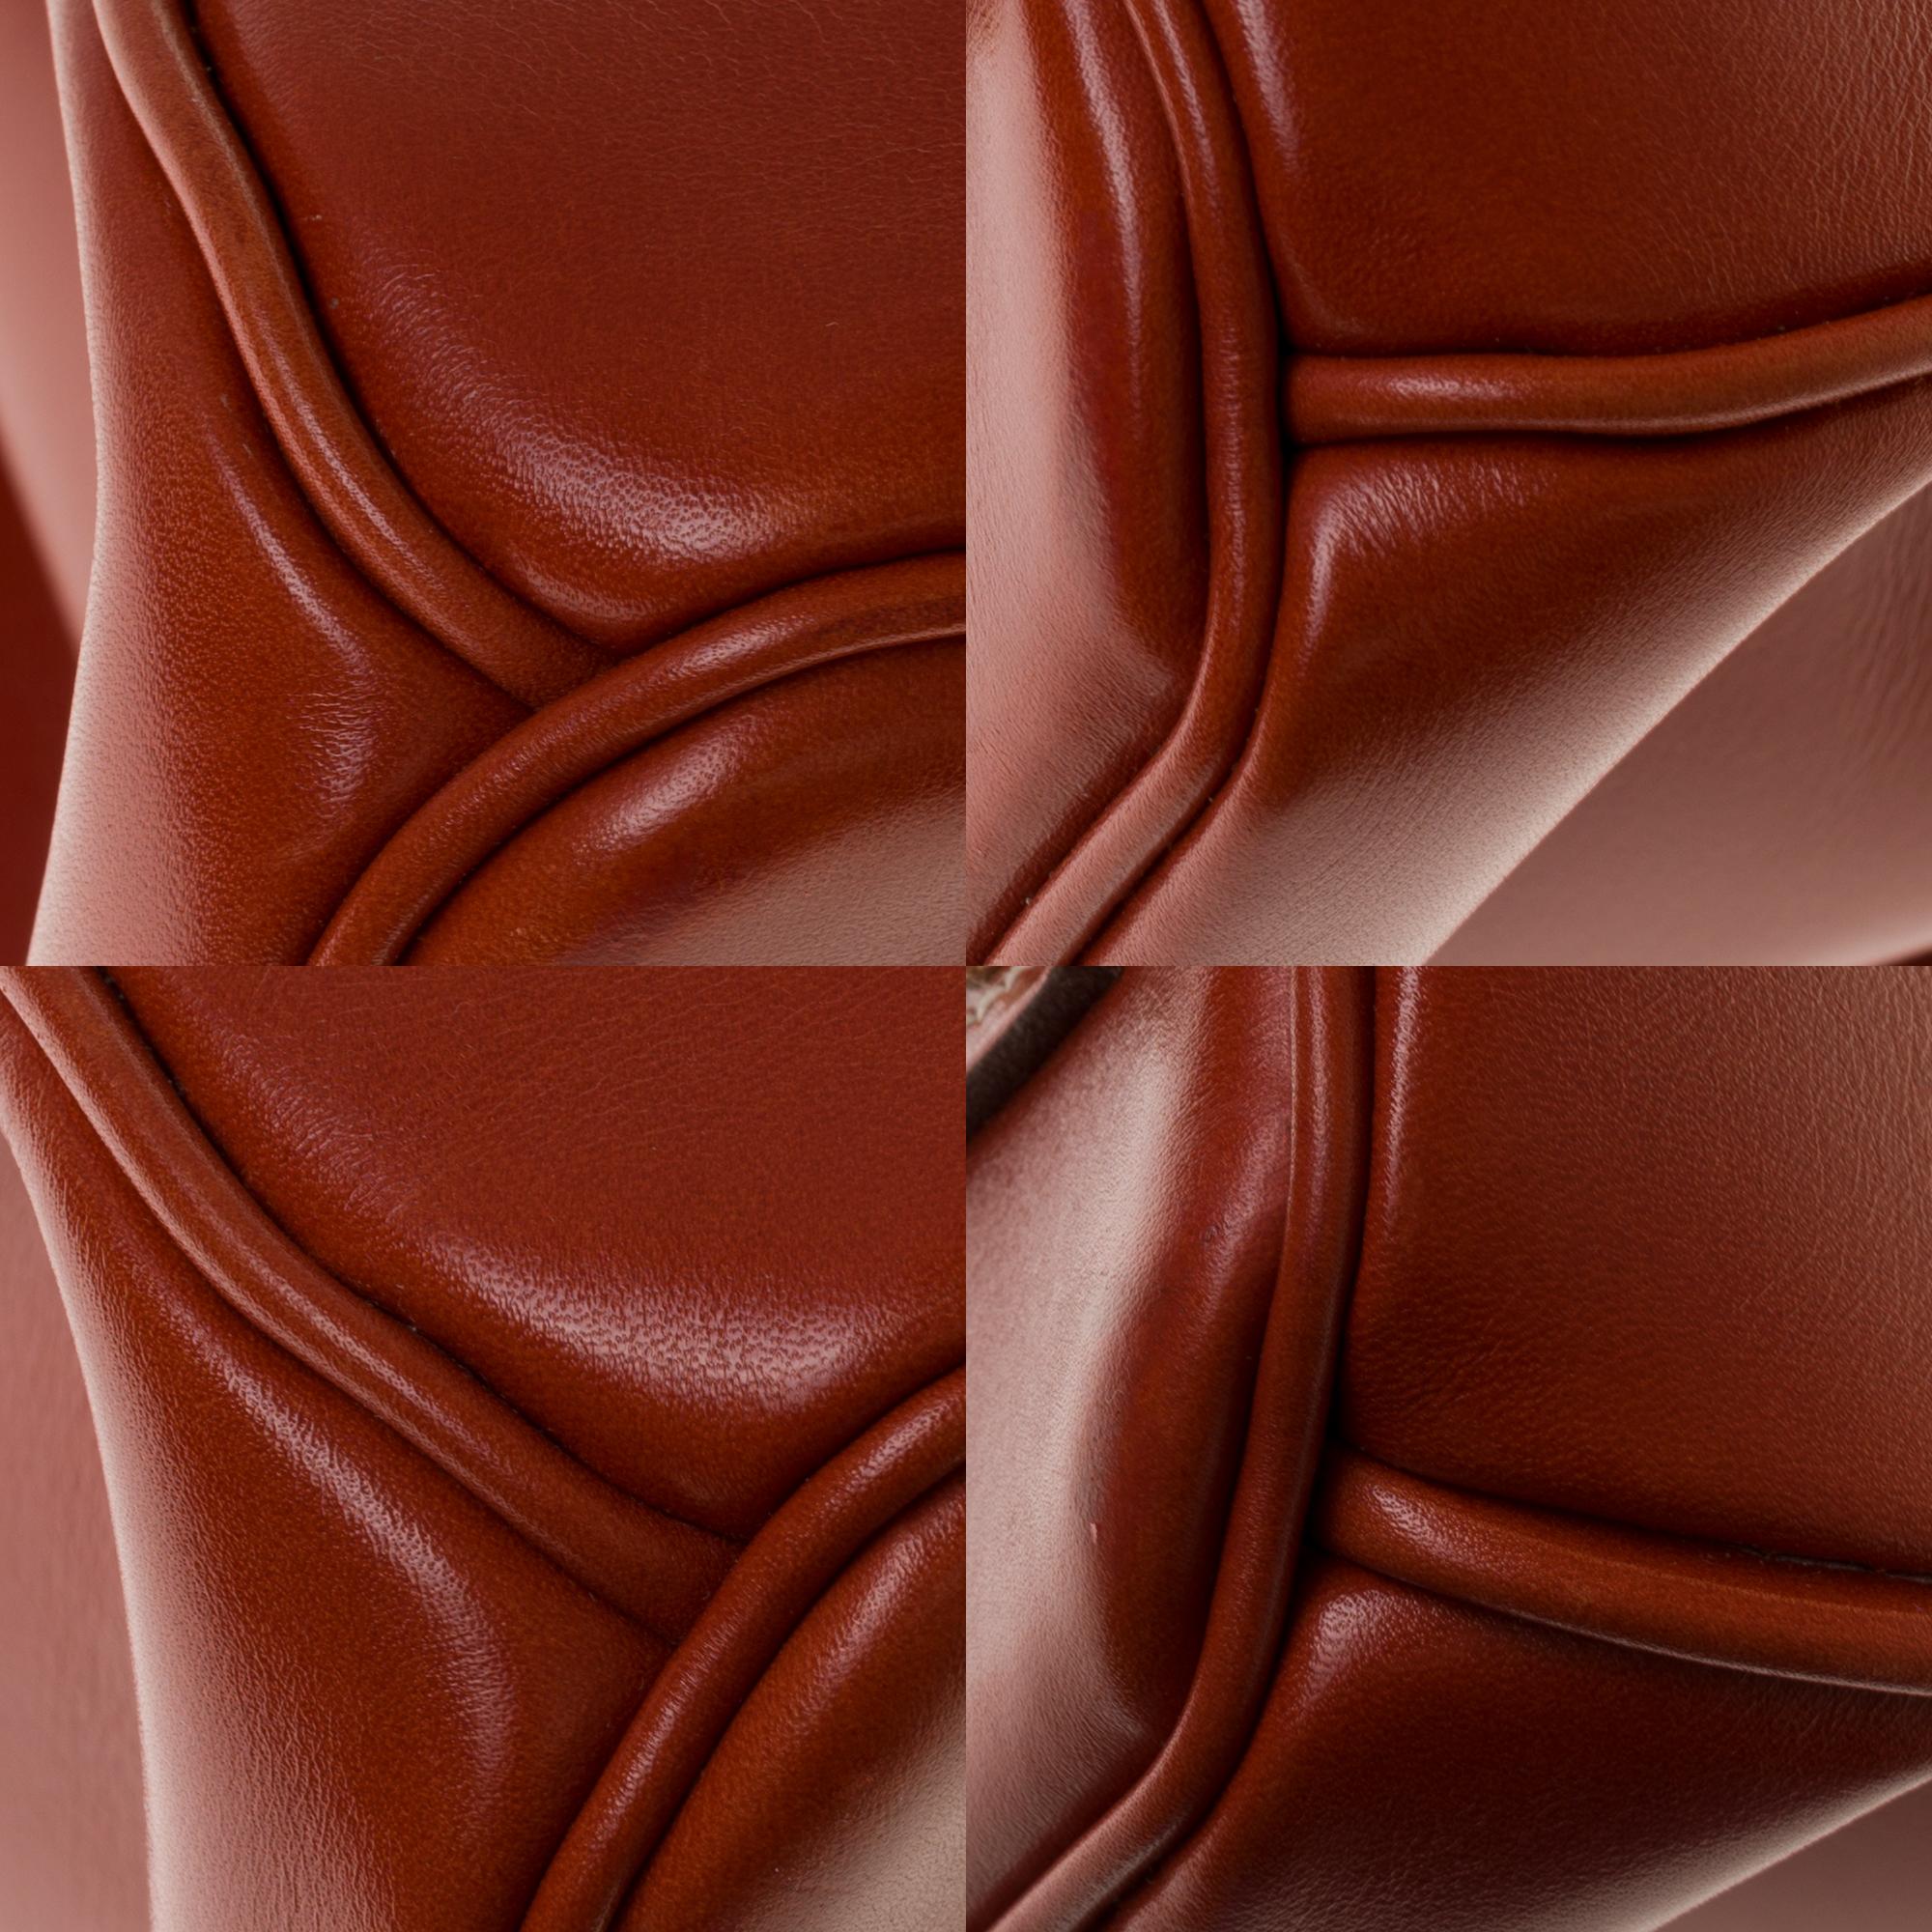 RARE Hermès Birkin 30 handbag in brick box calf leather and gold hardware 3